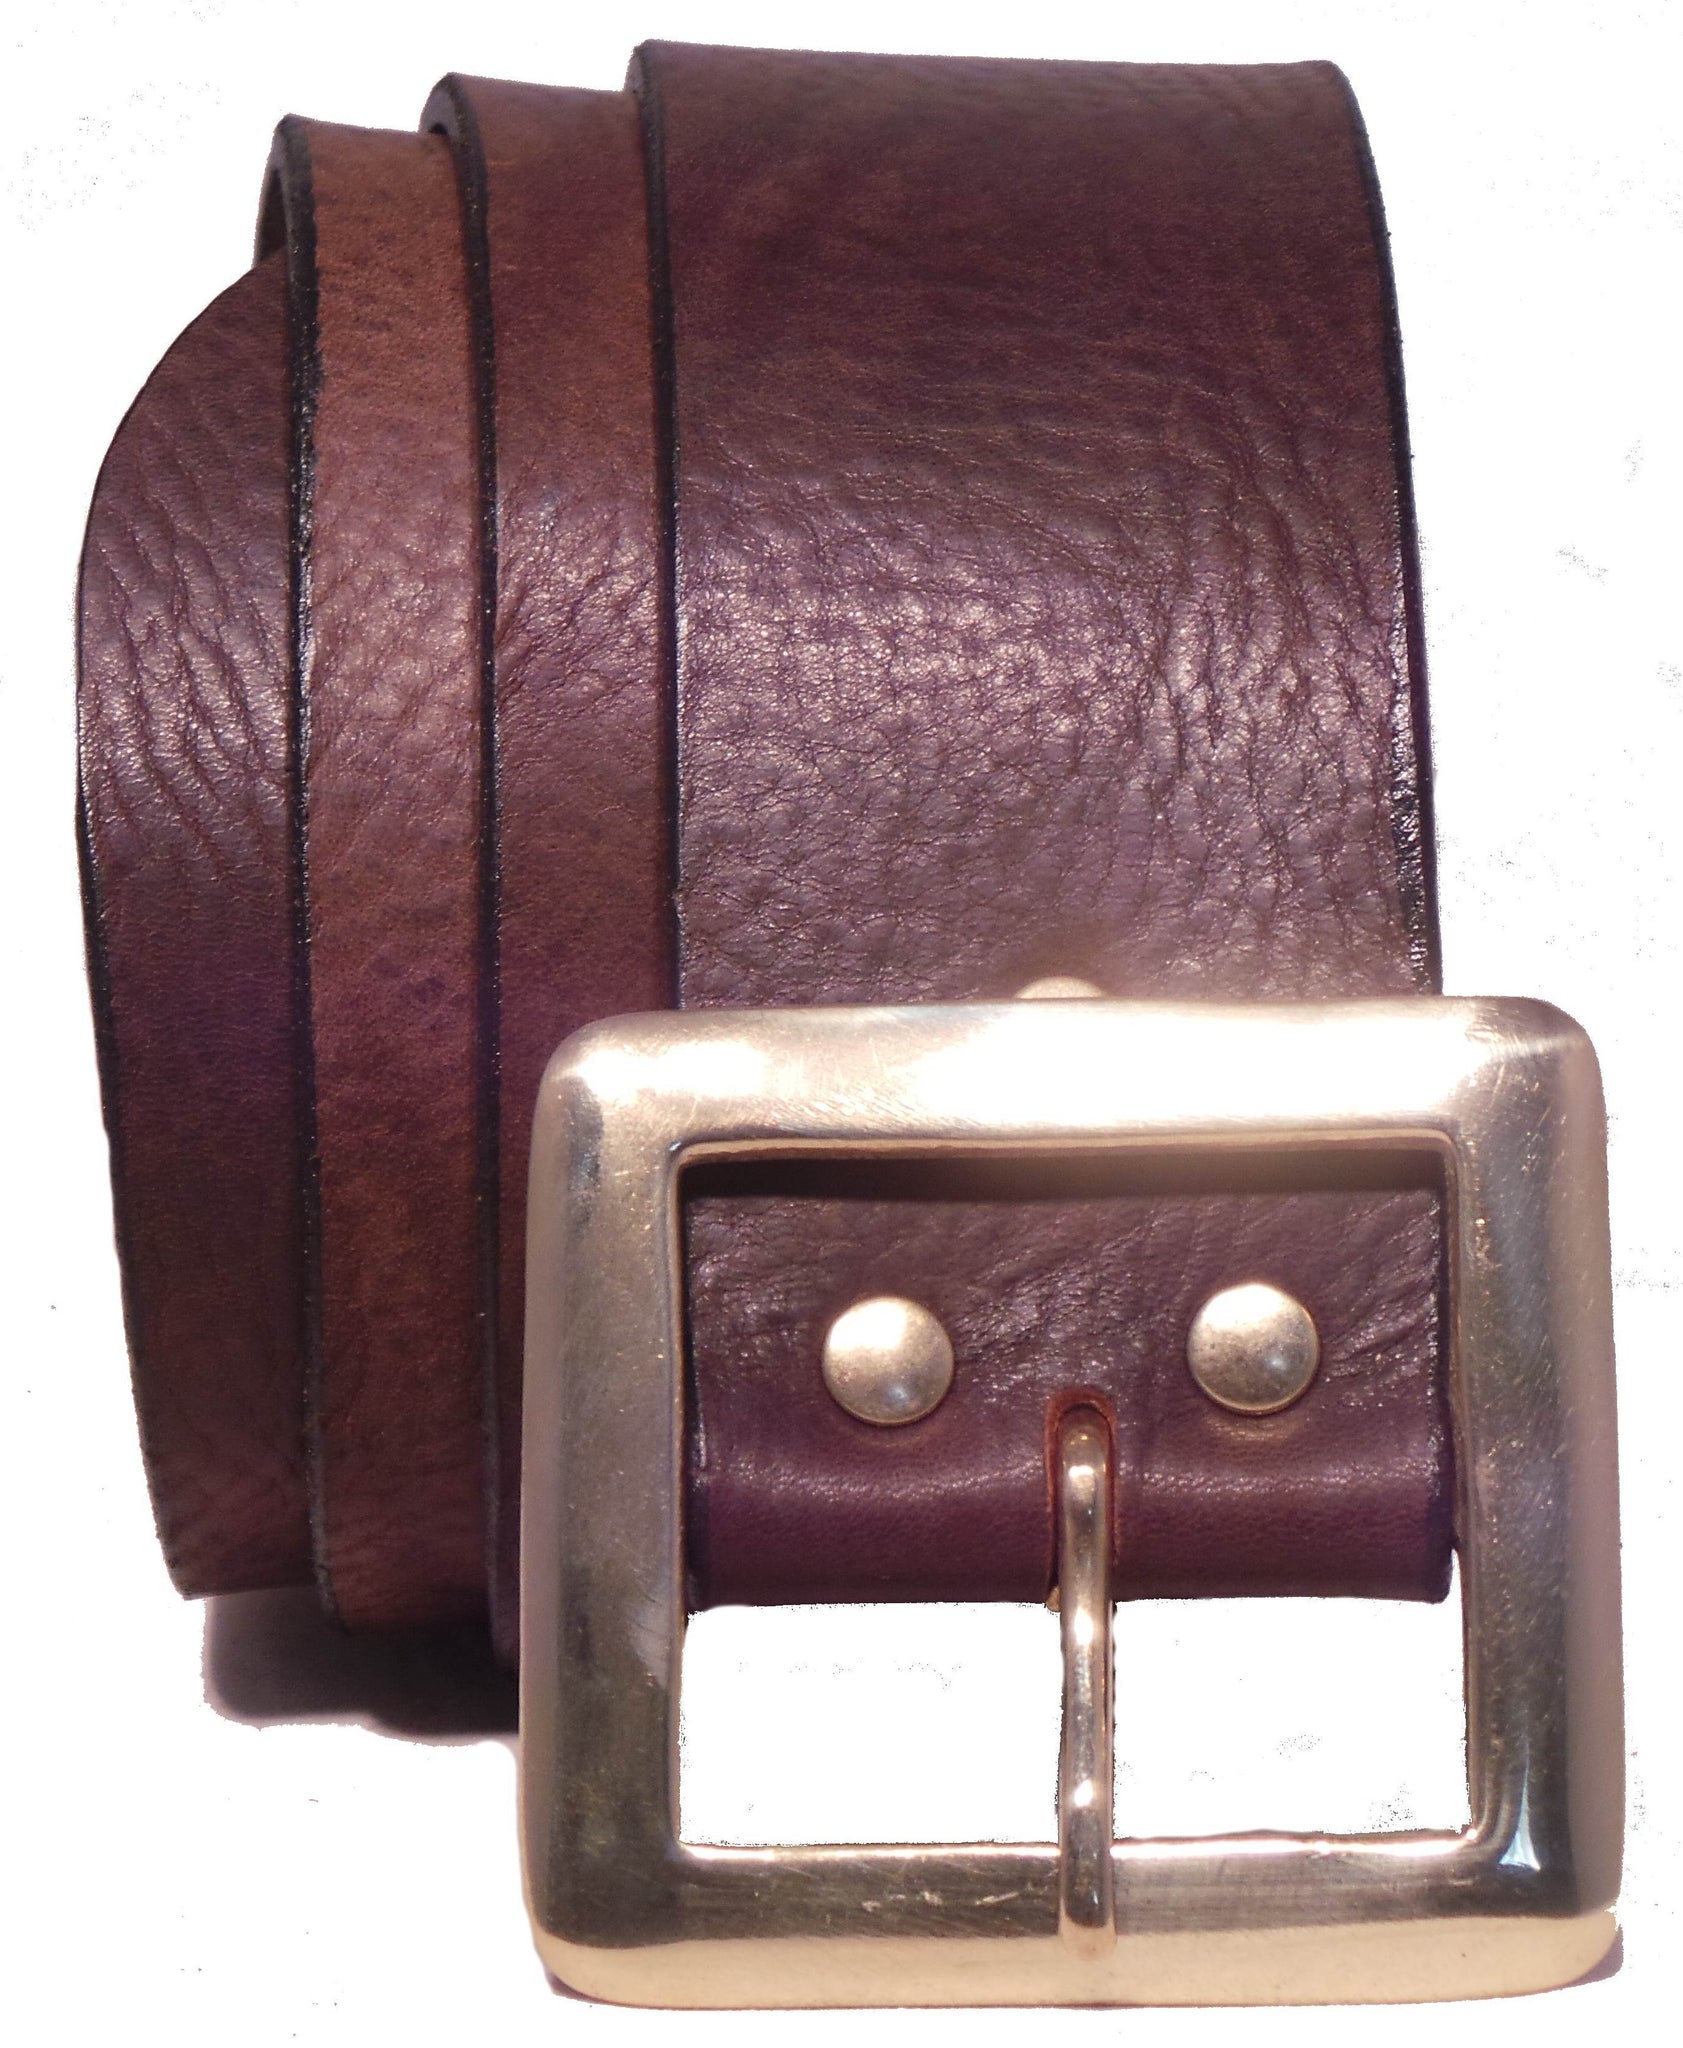 Golden square solid brass buckle - light brown leather belt - 3.5